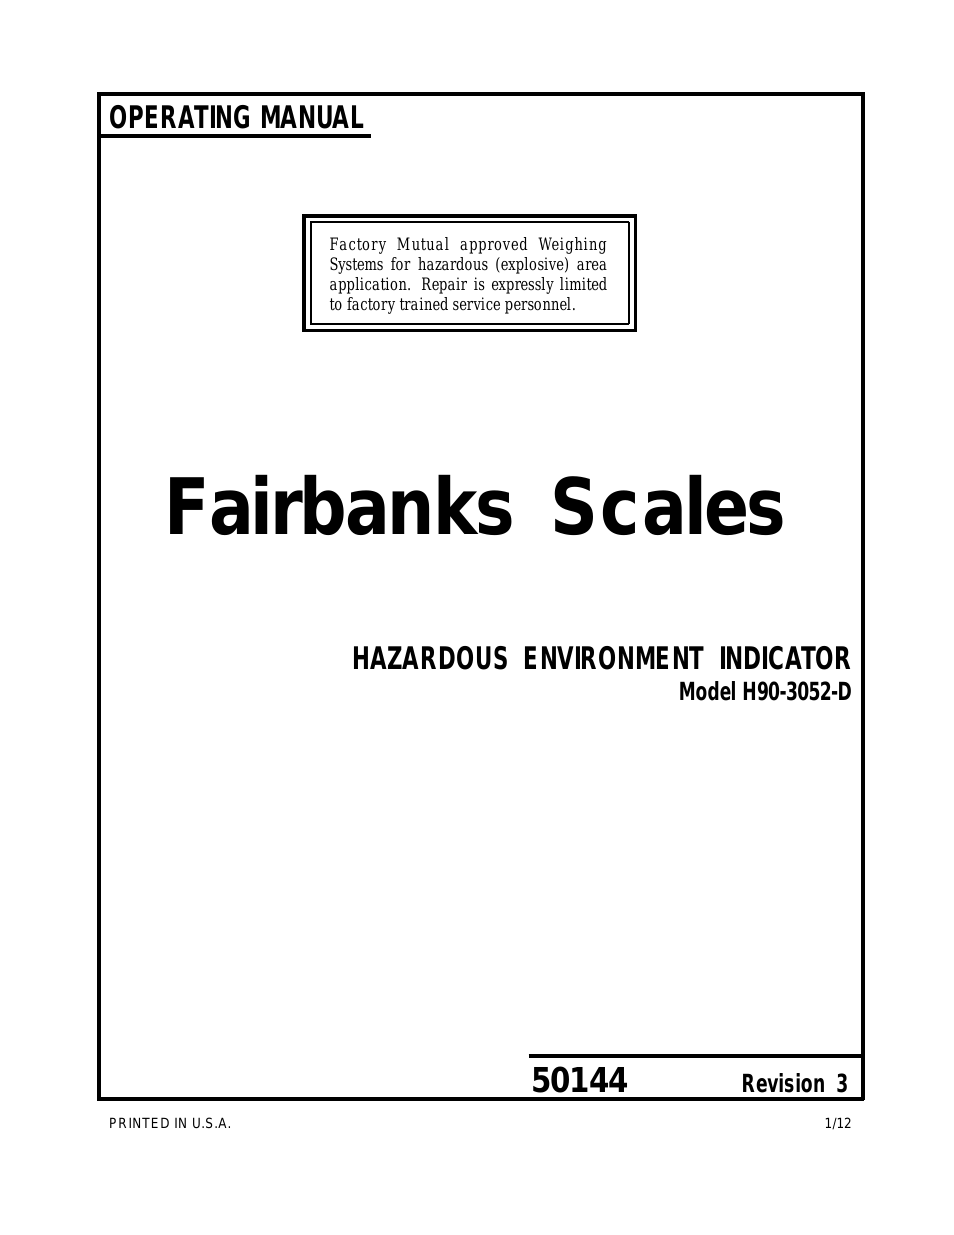 H90-3052-D Fairbanks Scales